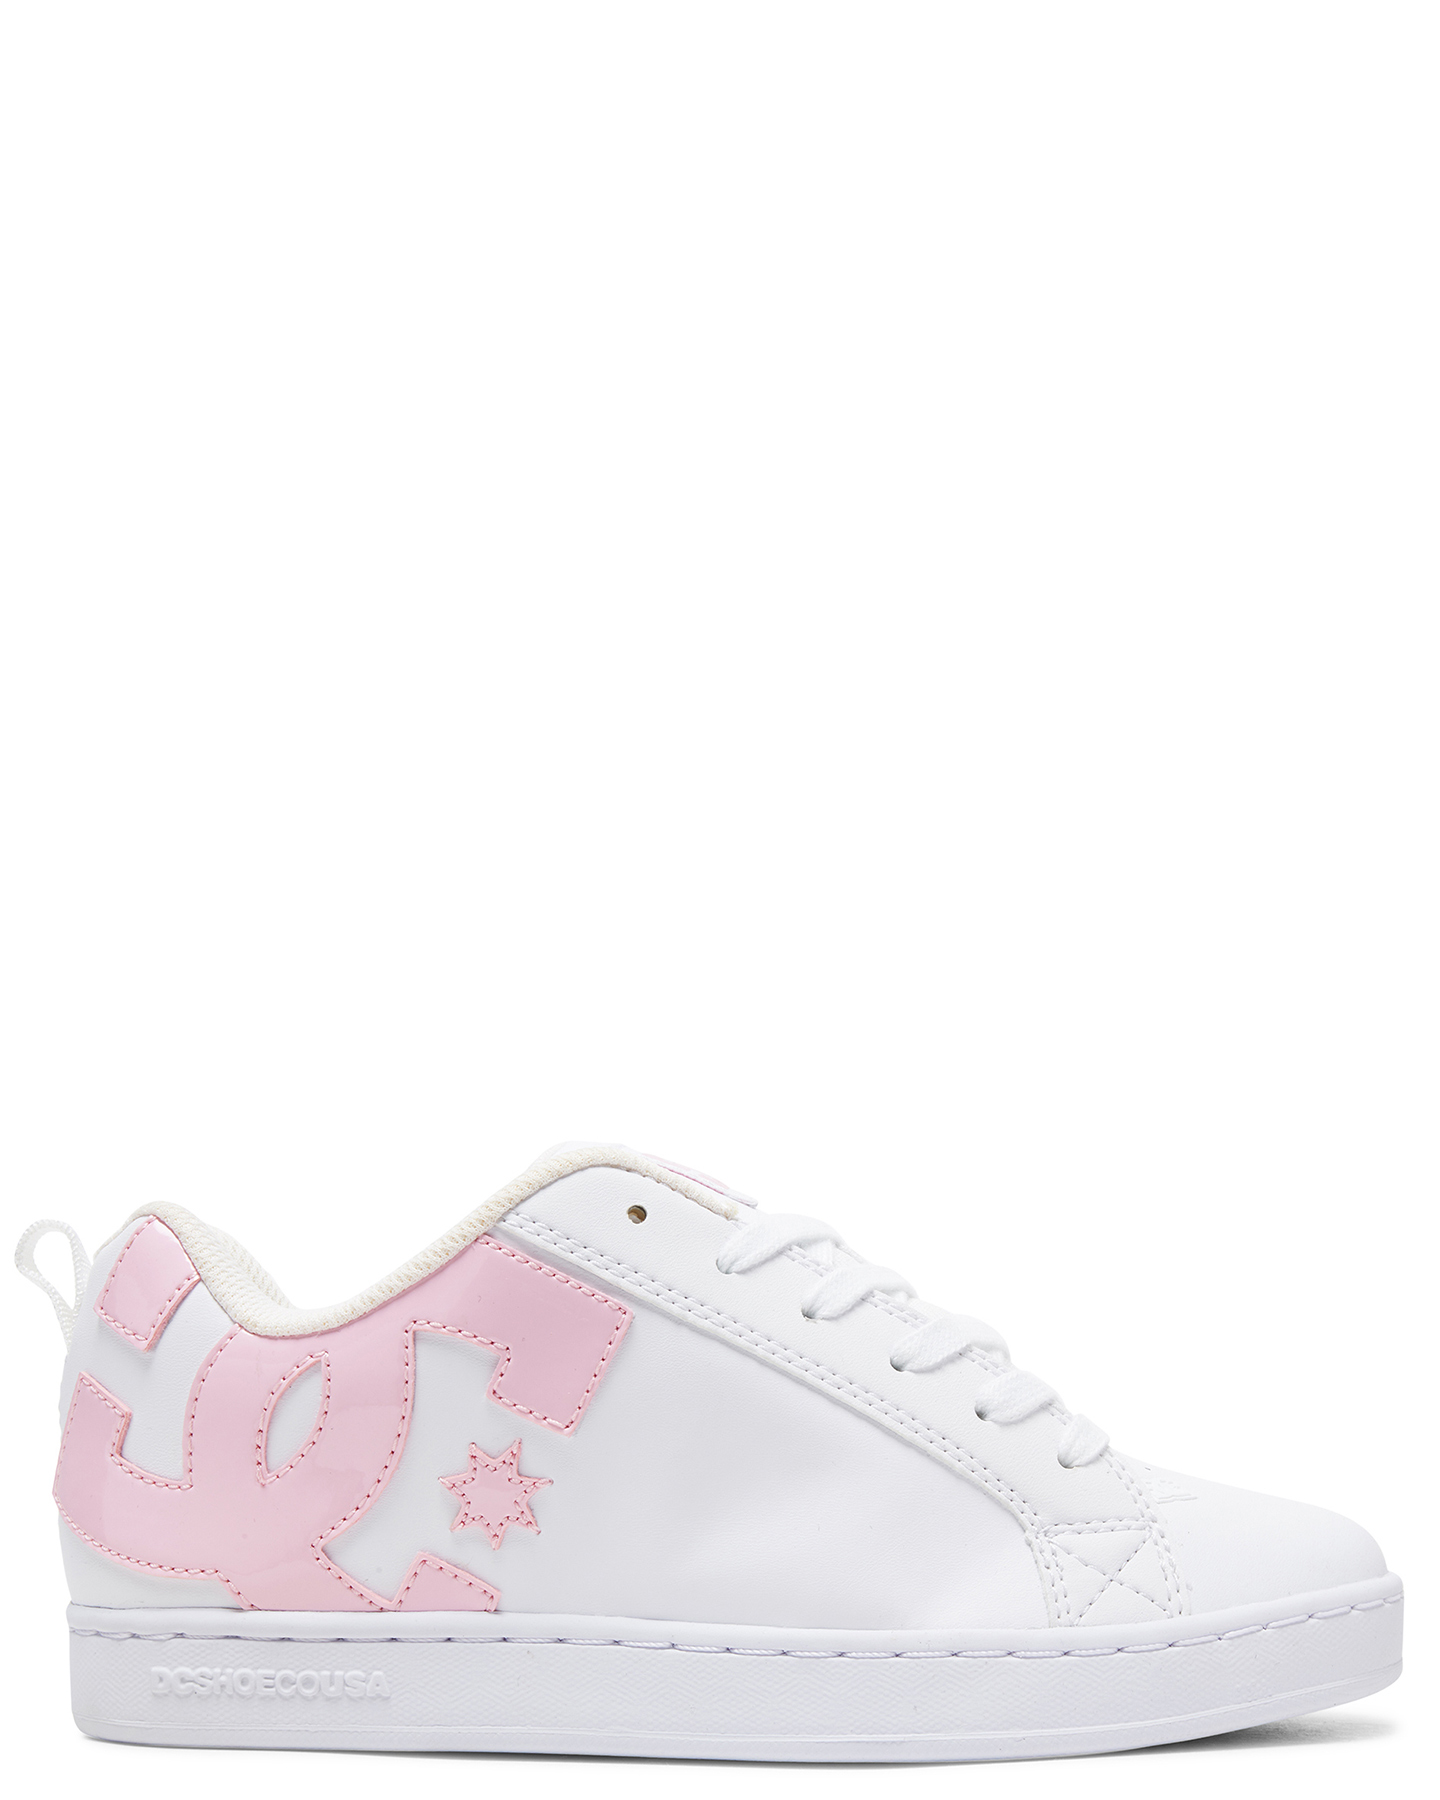 white dc skate shoes